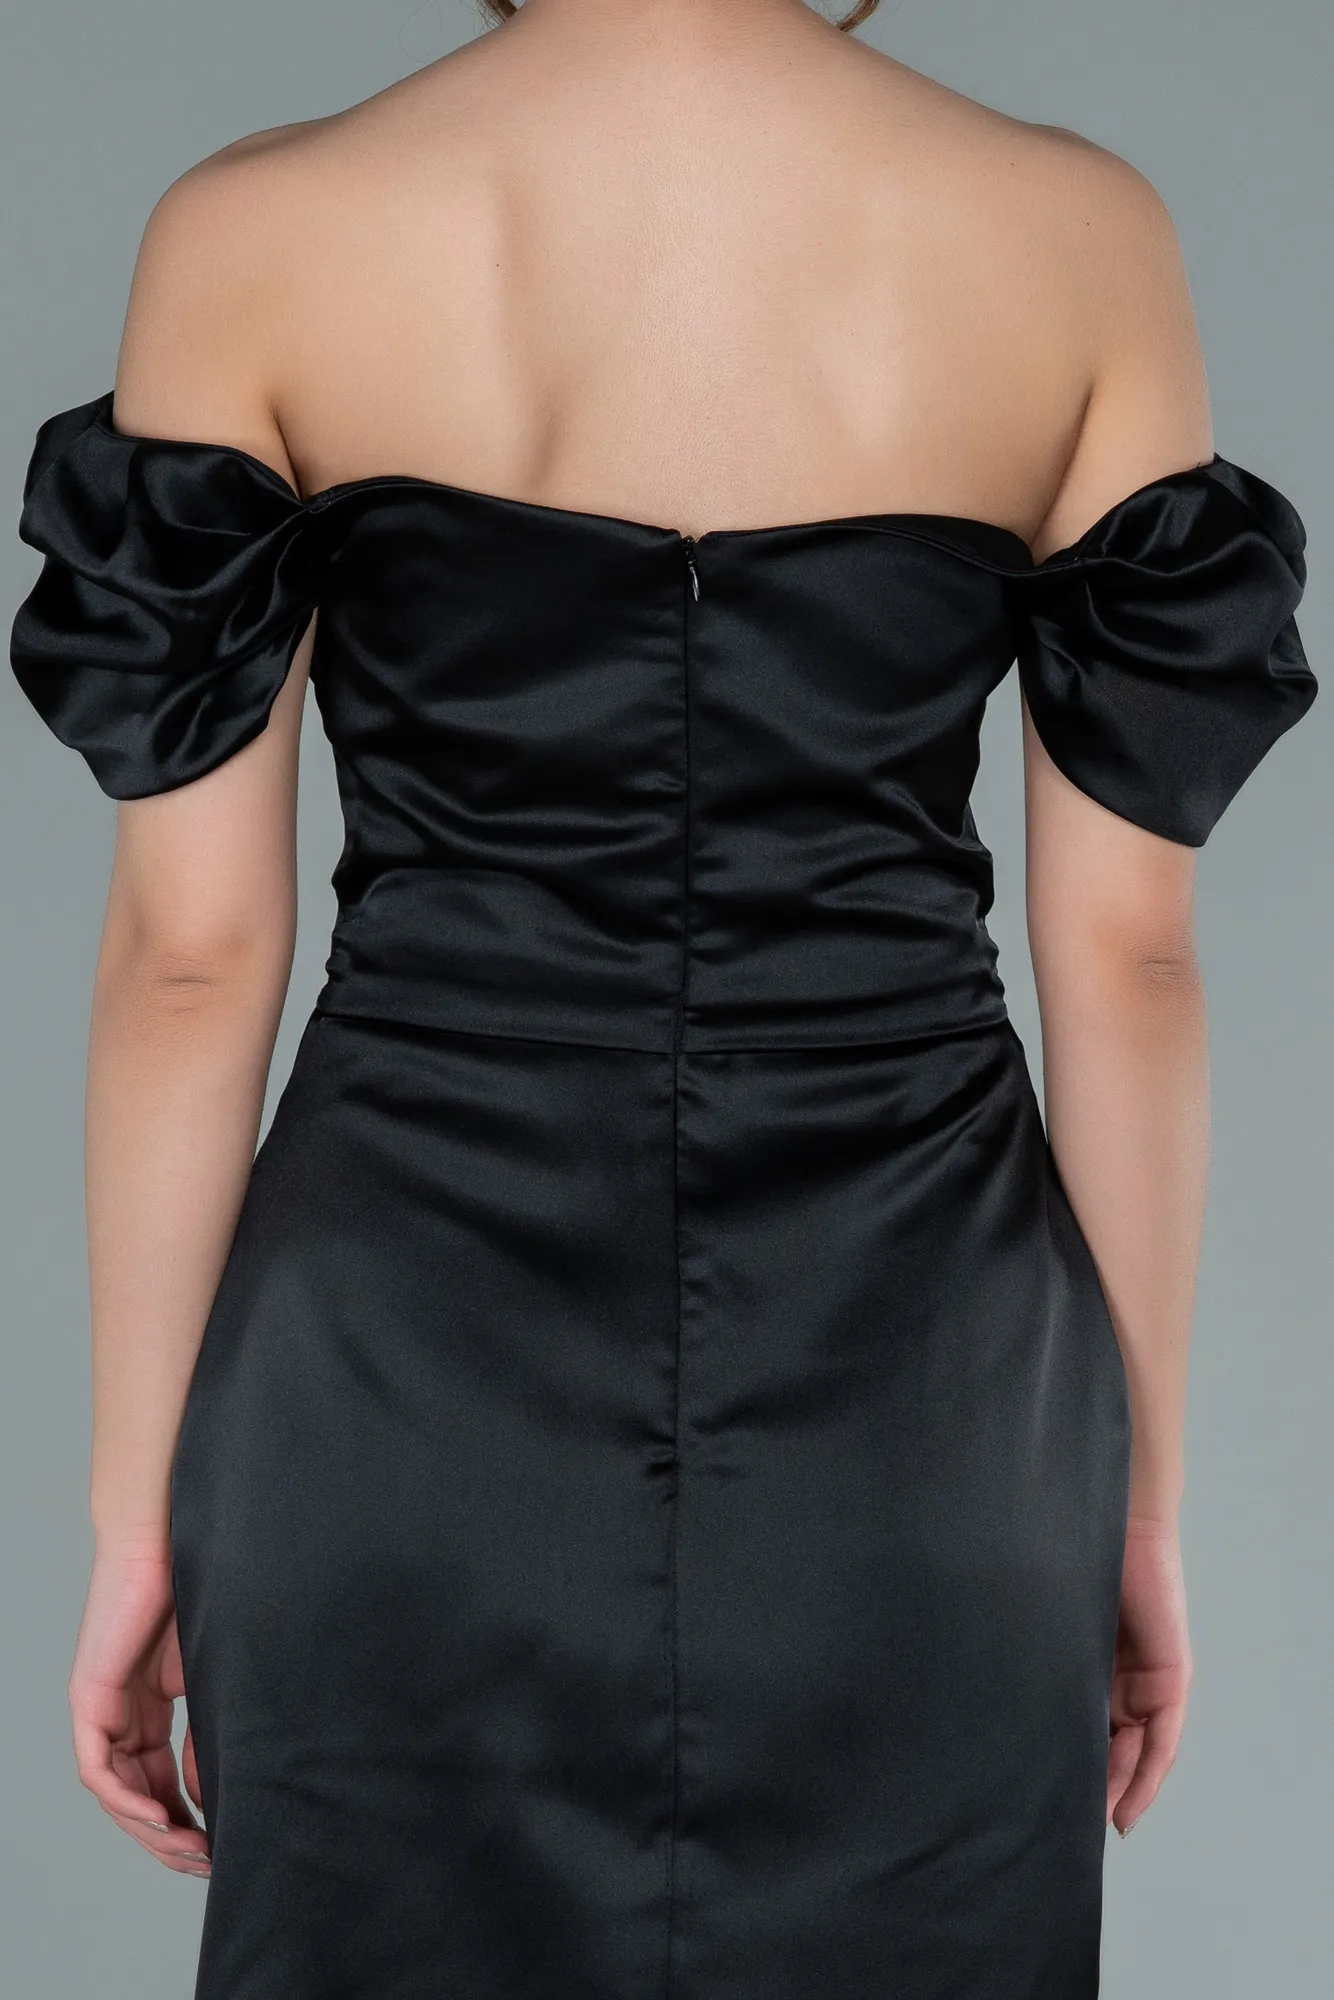 Black-Short Satin Invitation Dress ABK1394